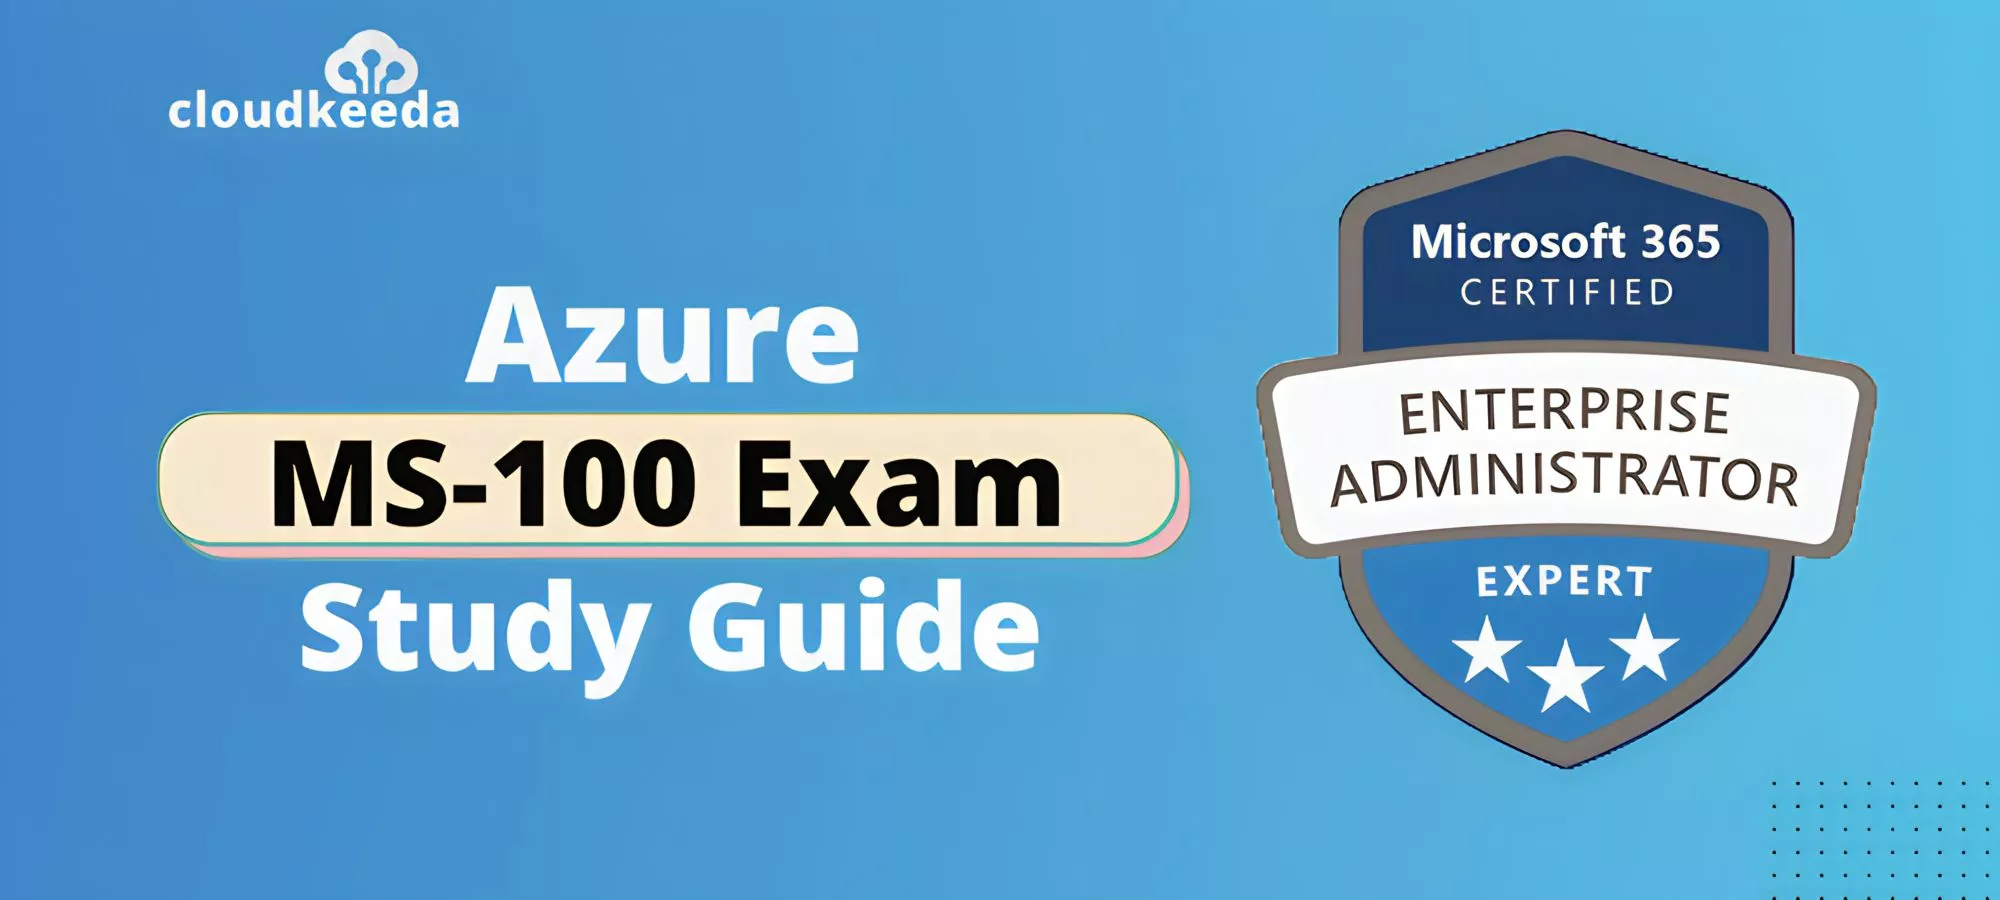 MS-100 Exam Overview